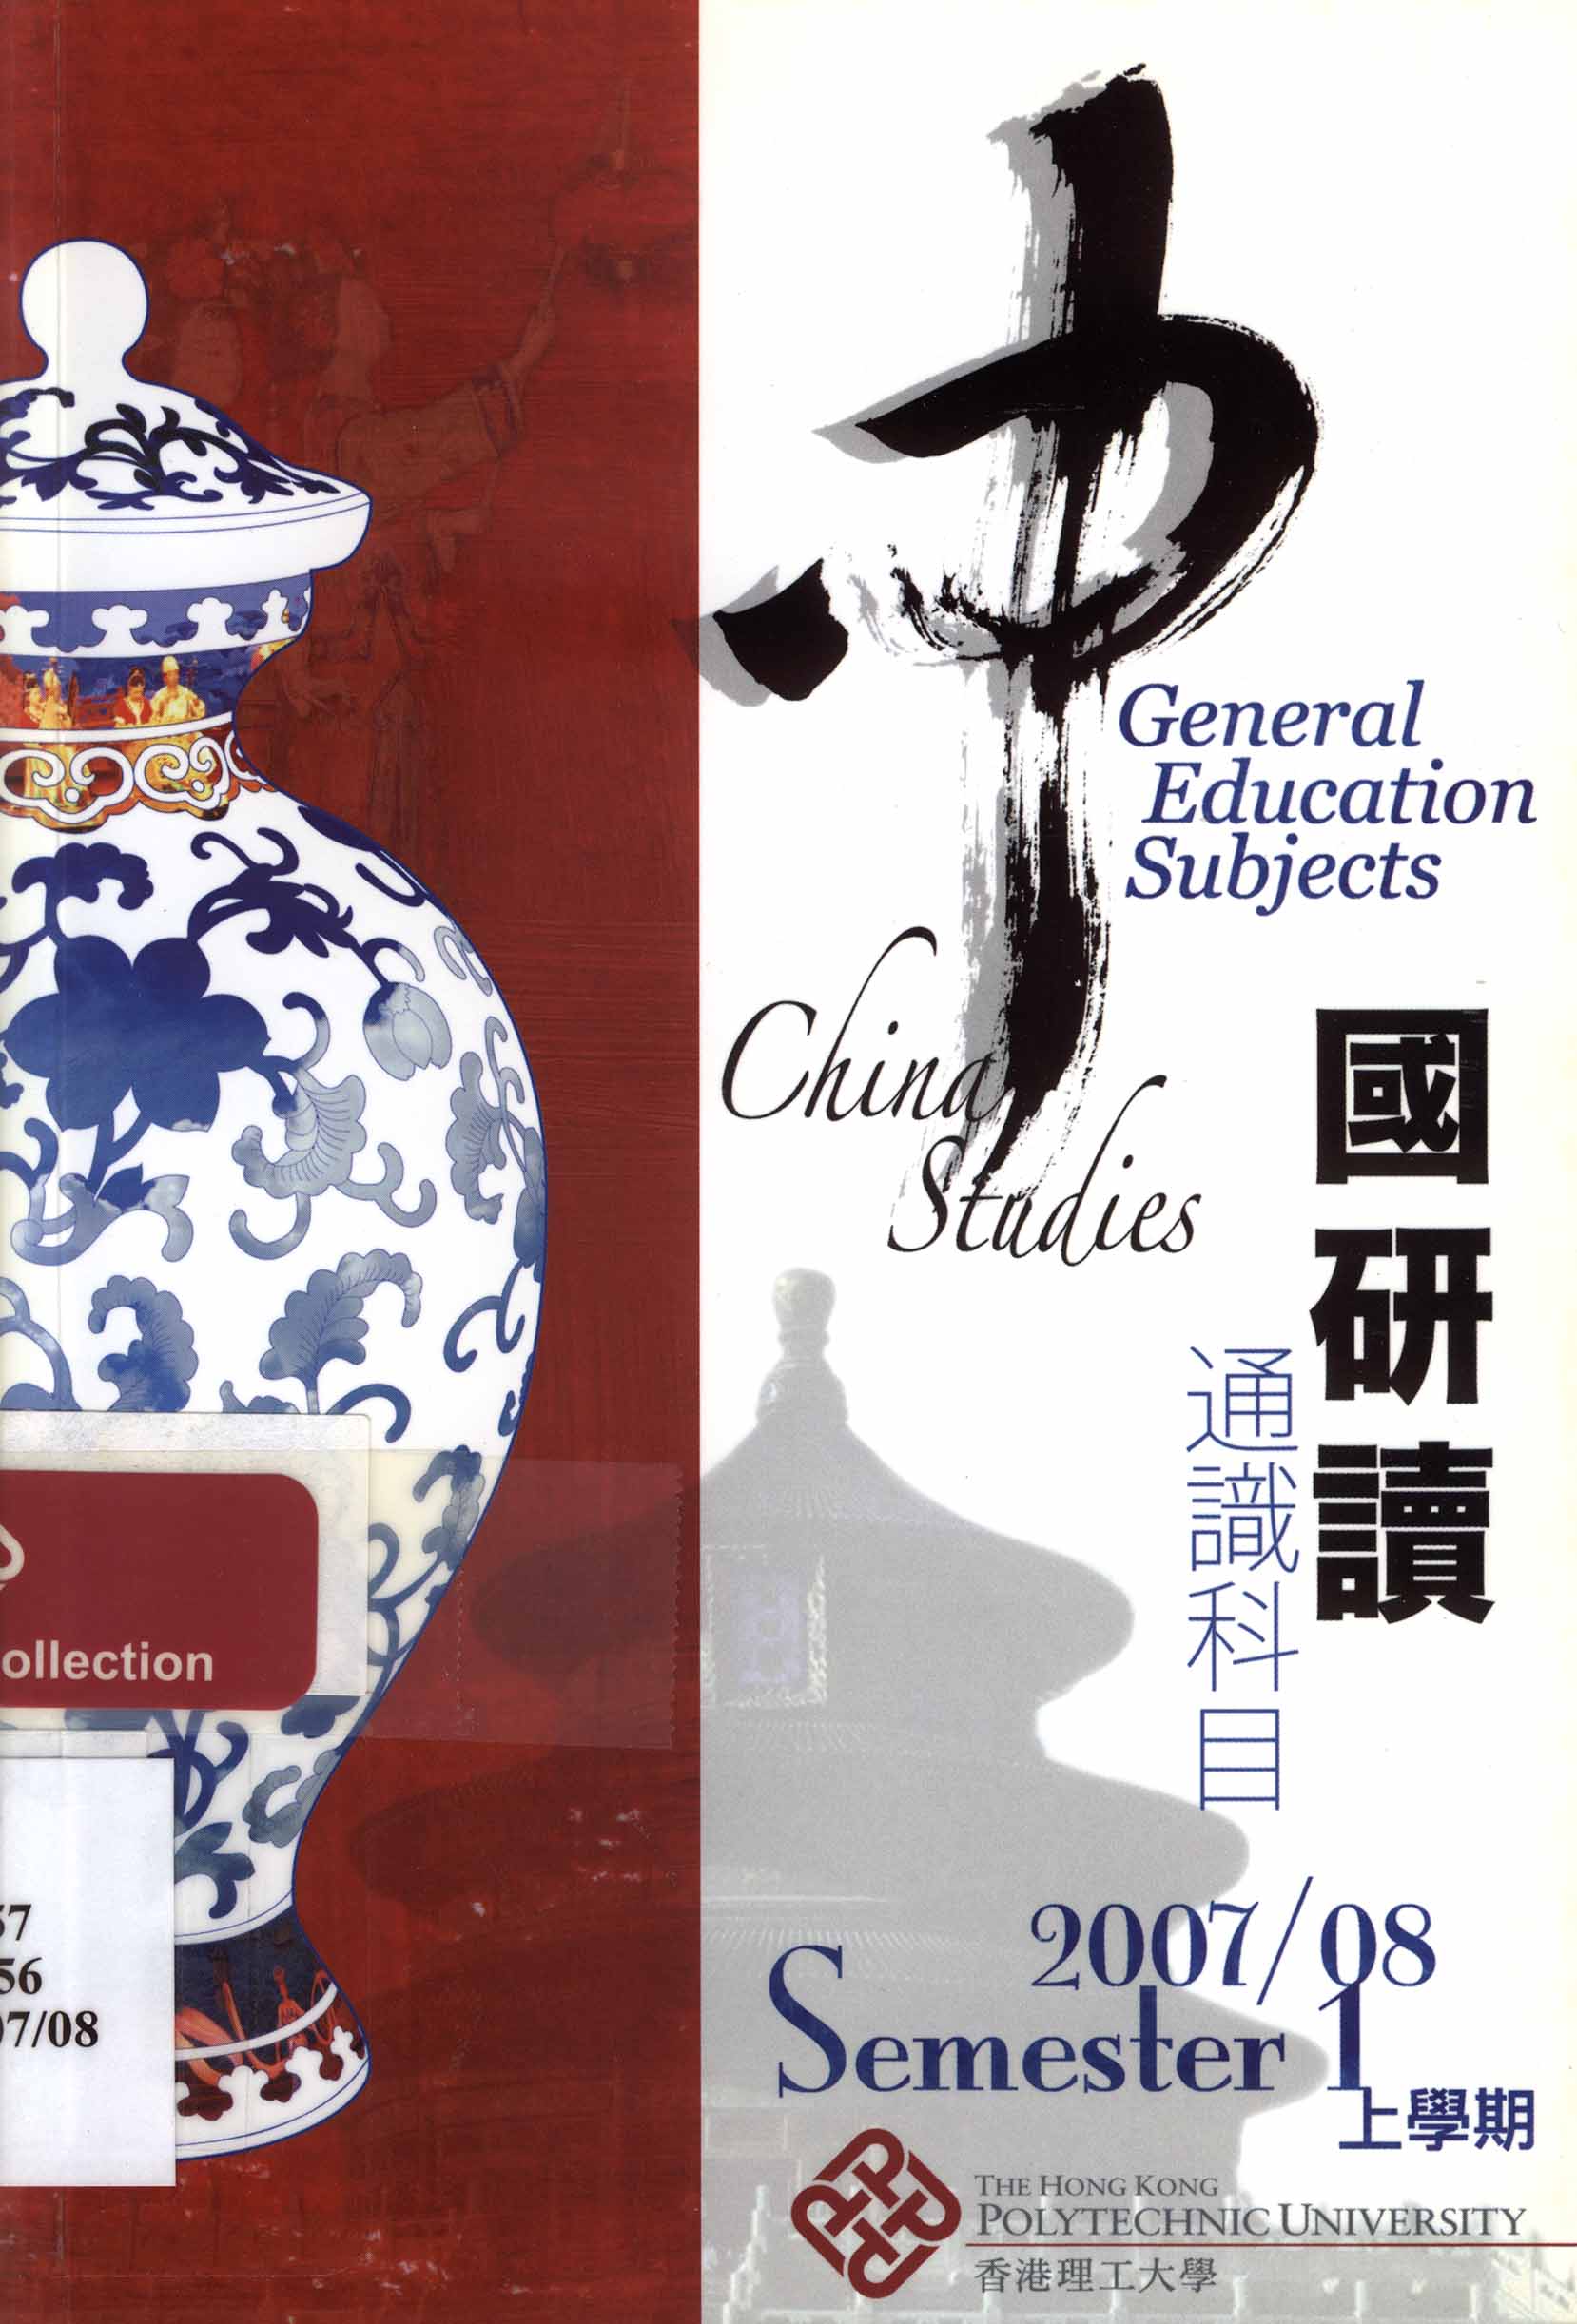 China studies general education subject [Semester 1 of 2007/08]